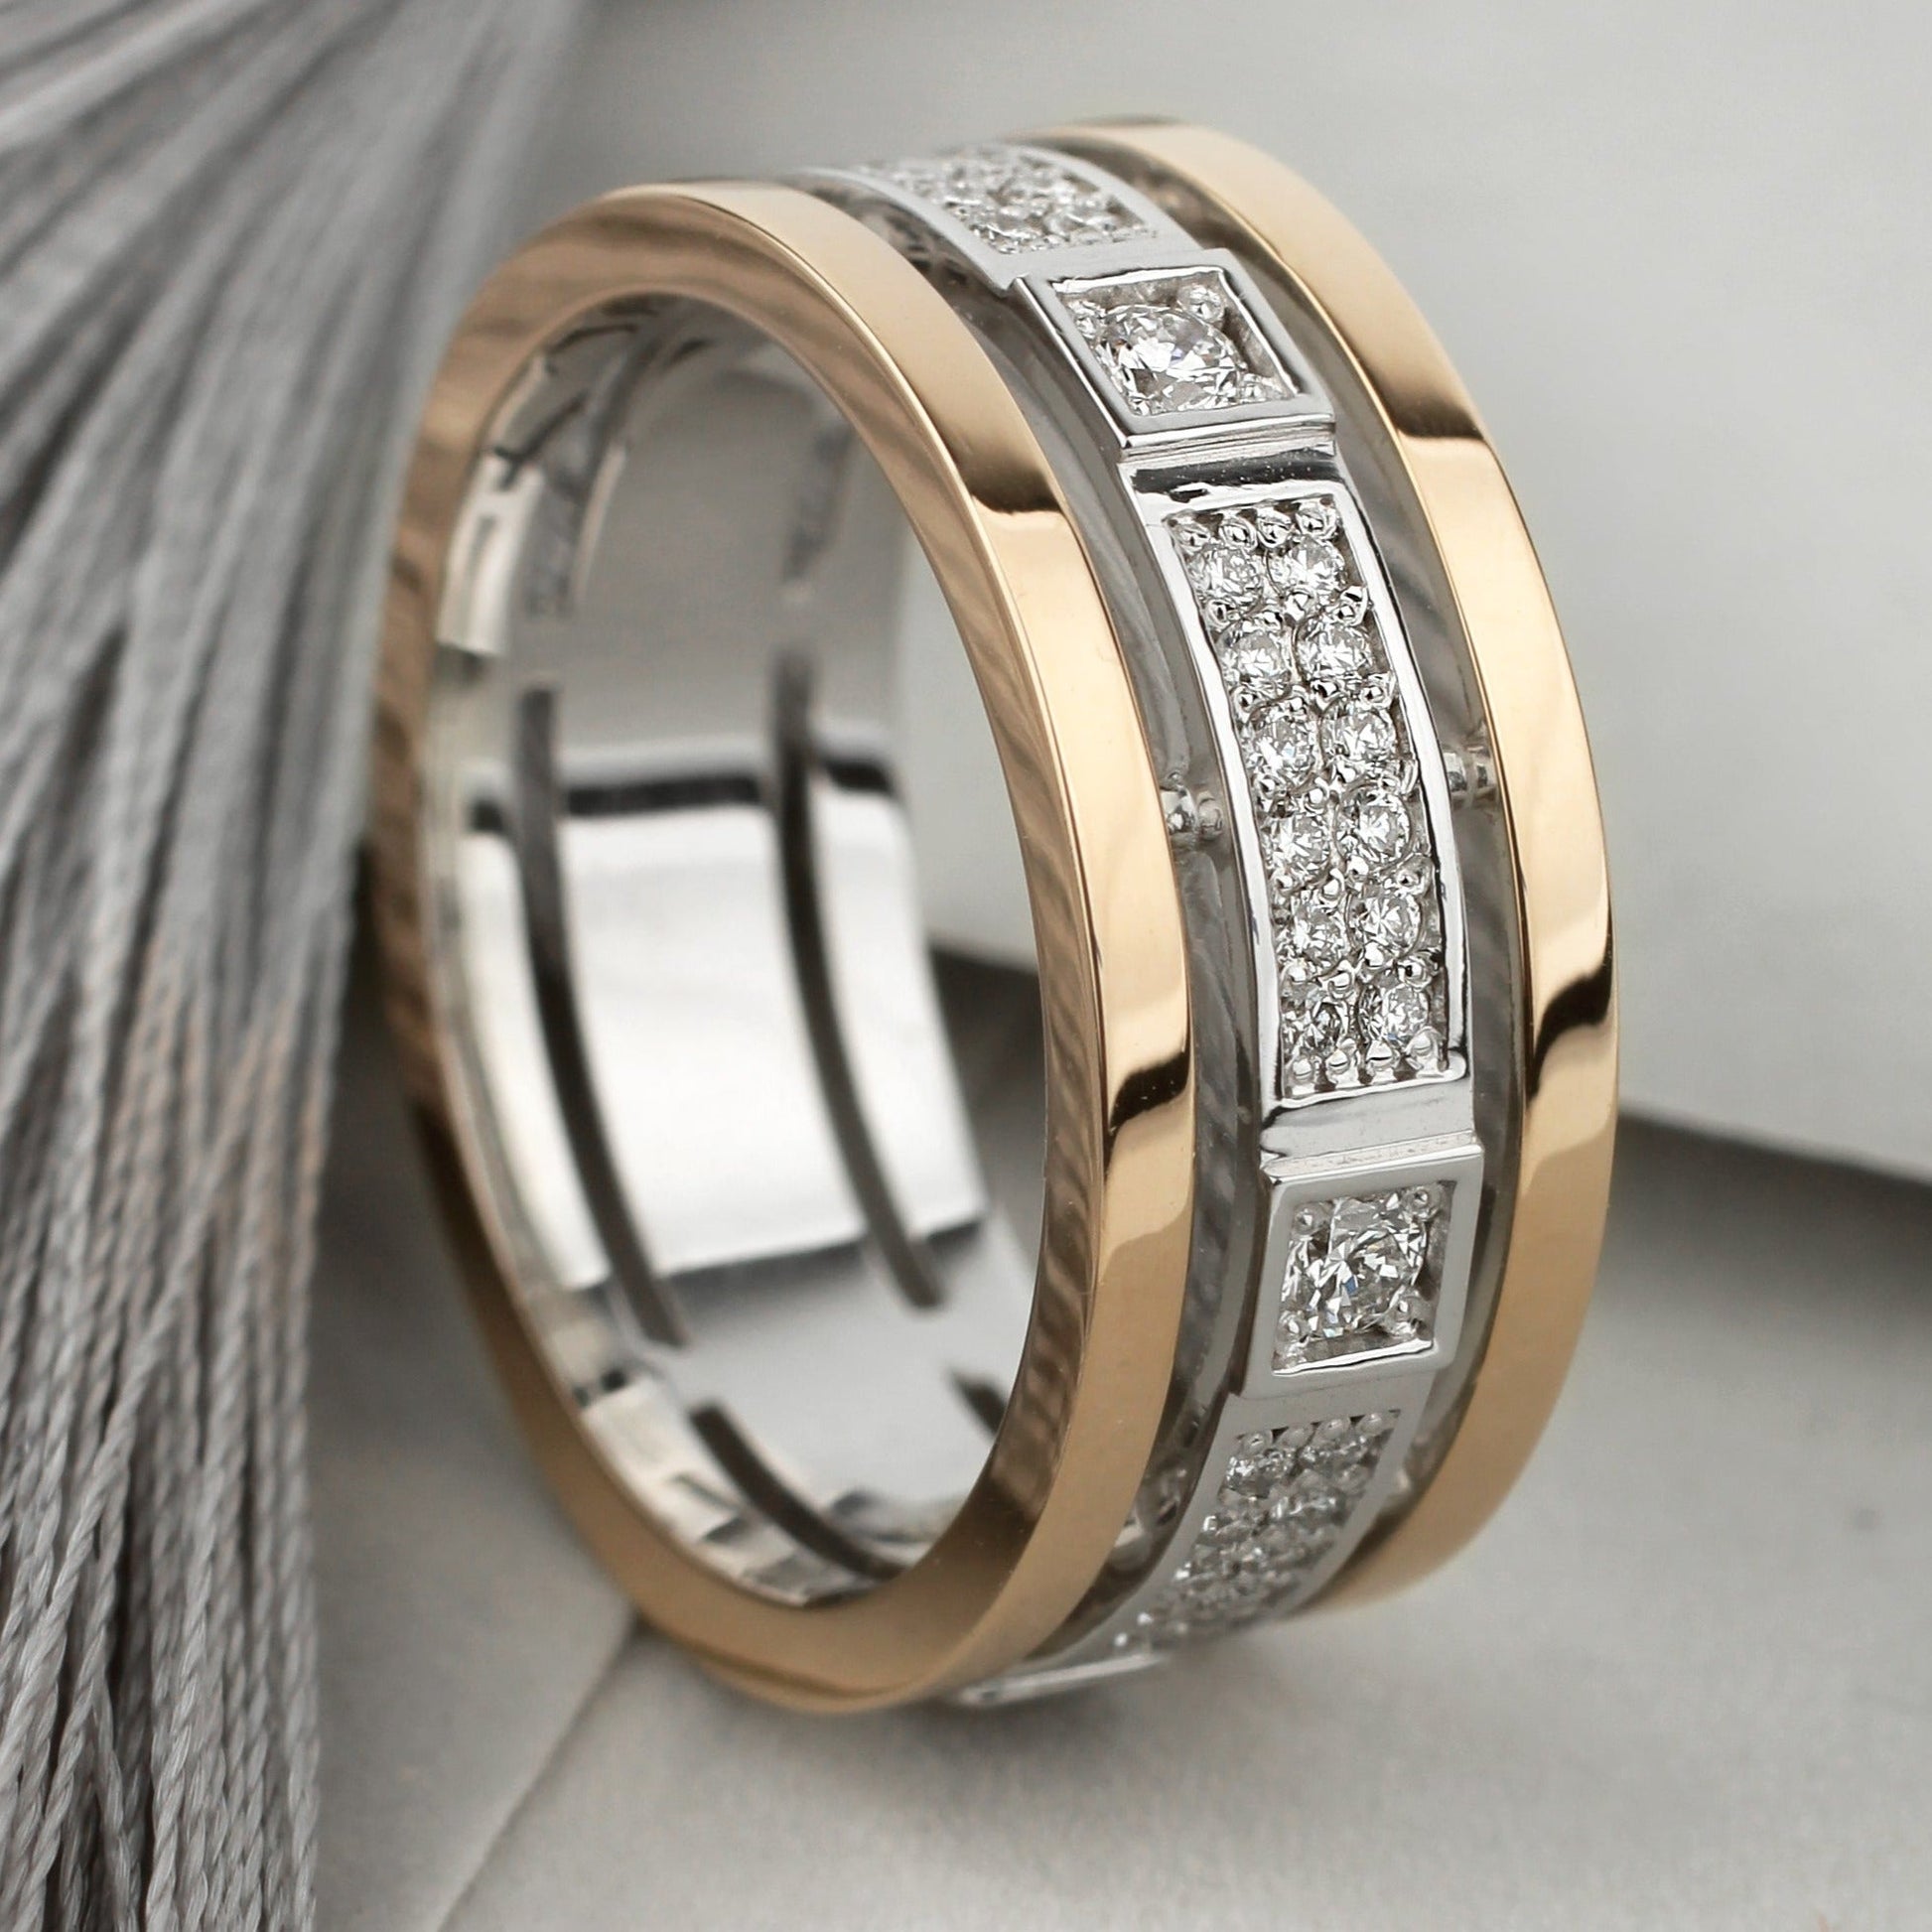 Unique women's wedding ring - escorialjewelry